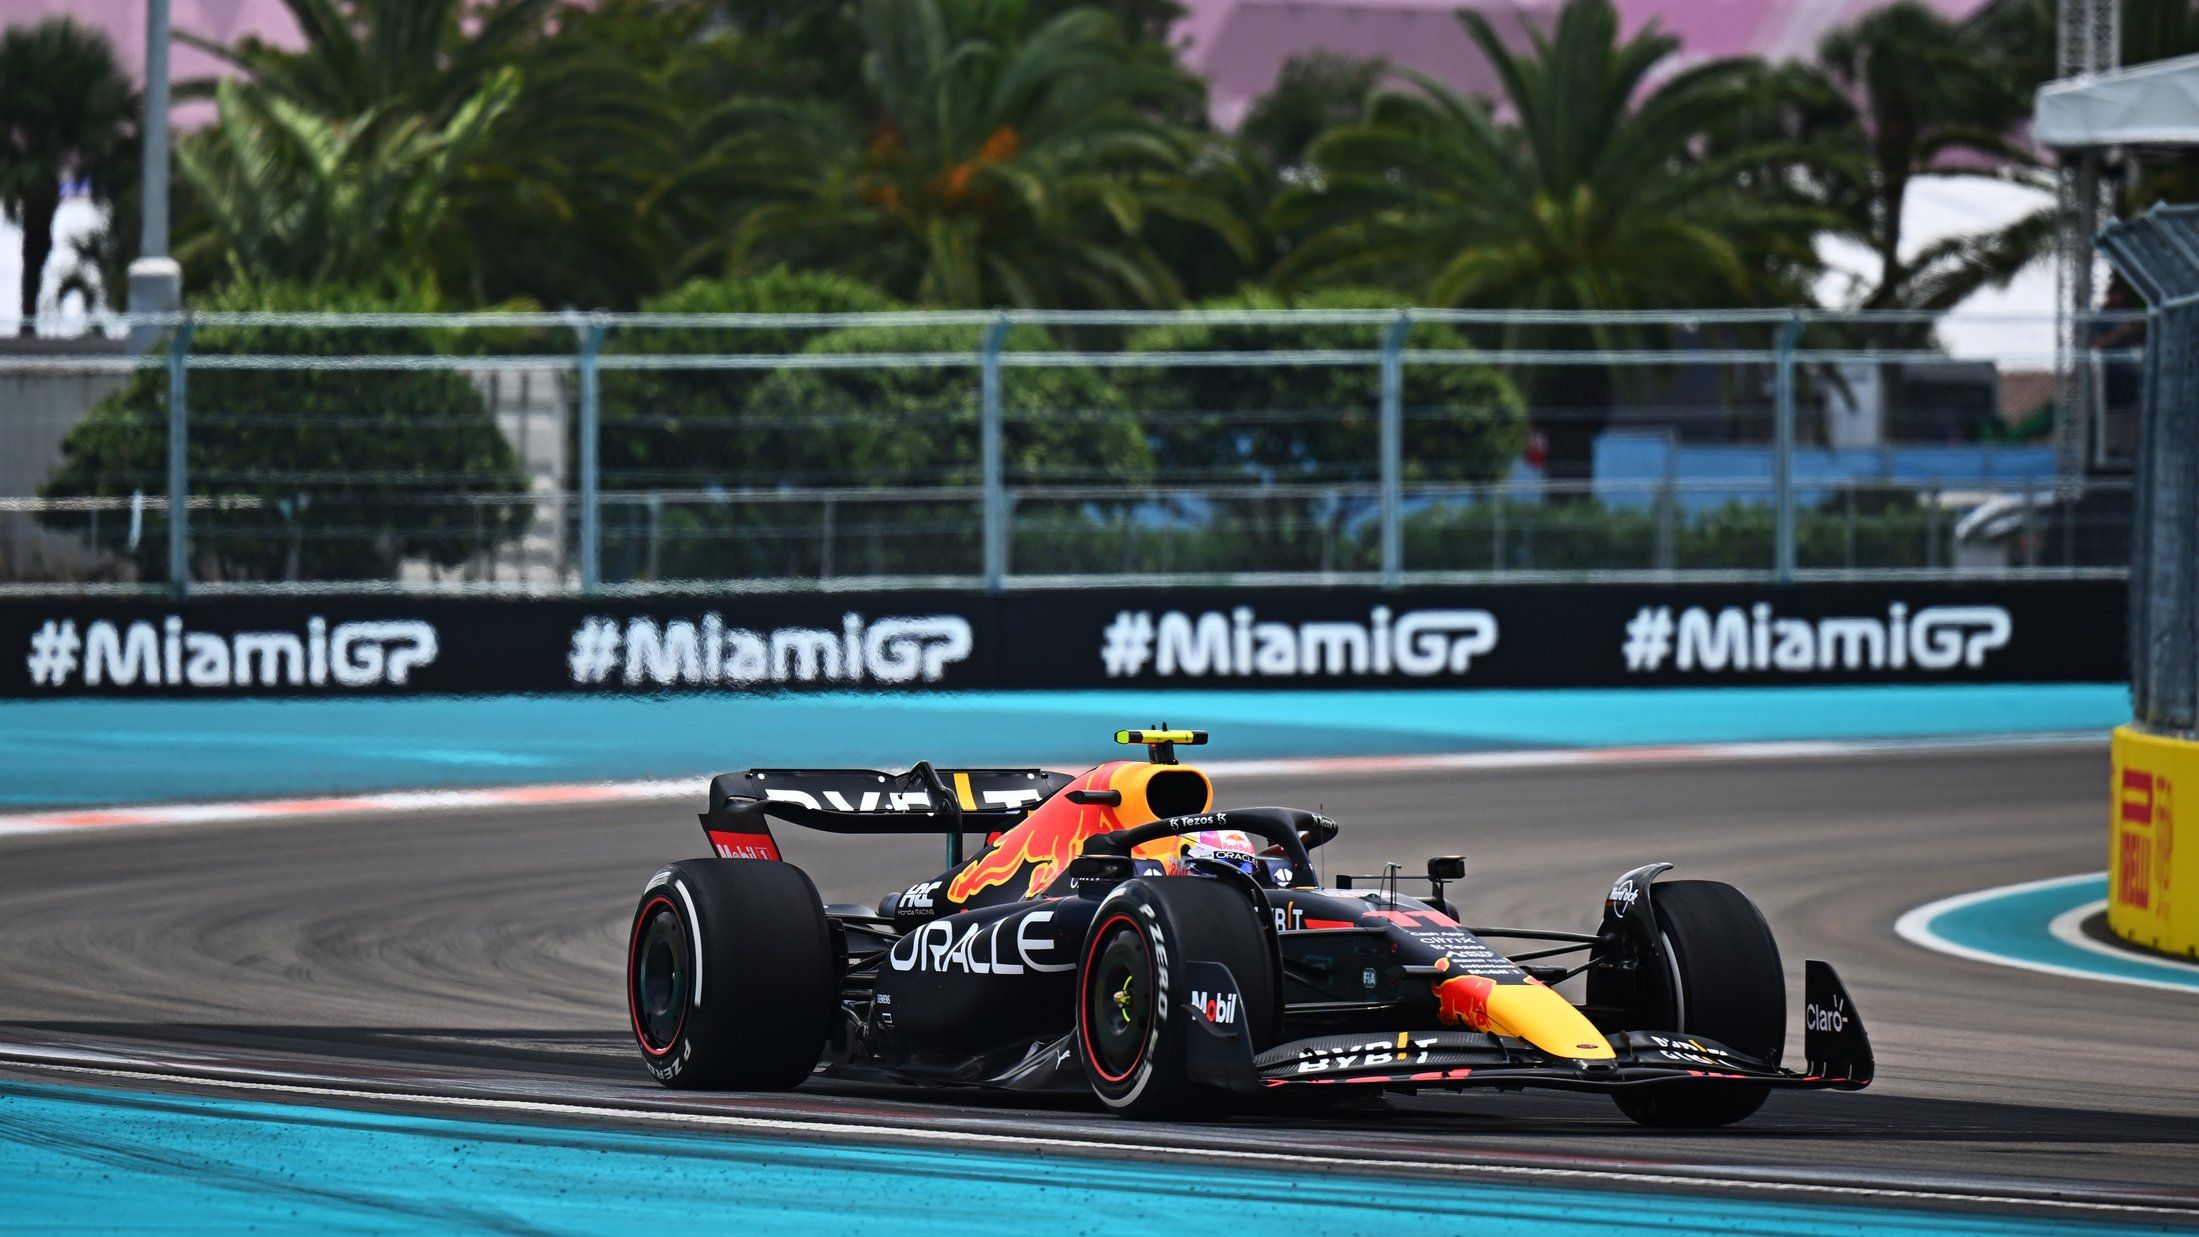 Red Bull races at the 2022 Miami Grand Prix.